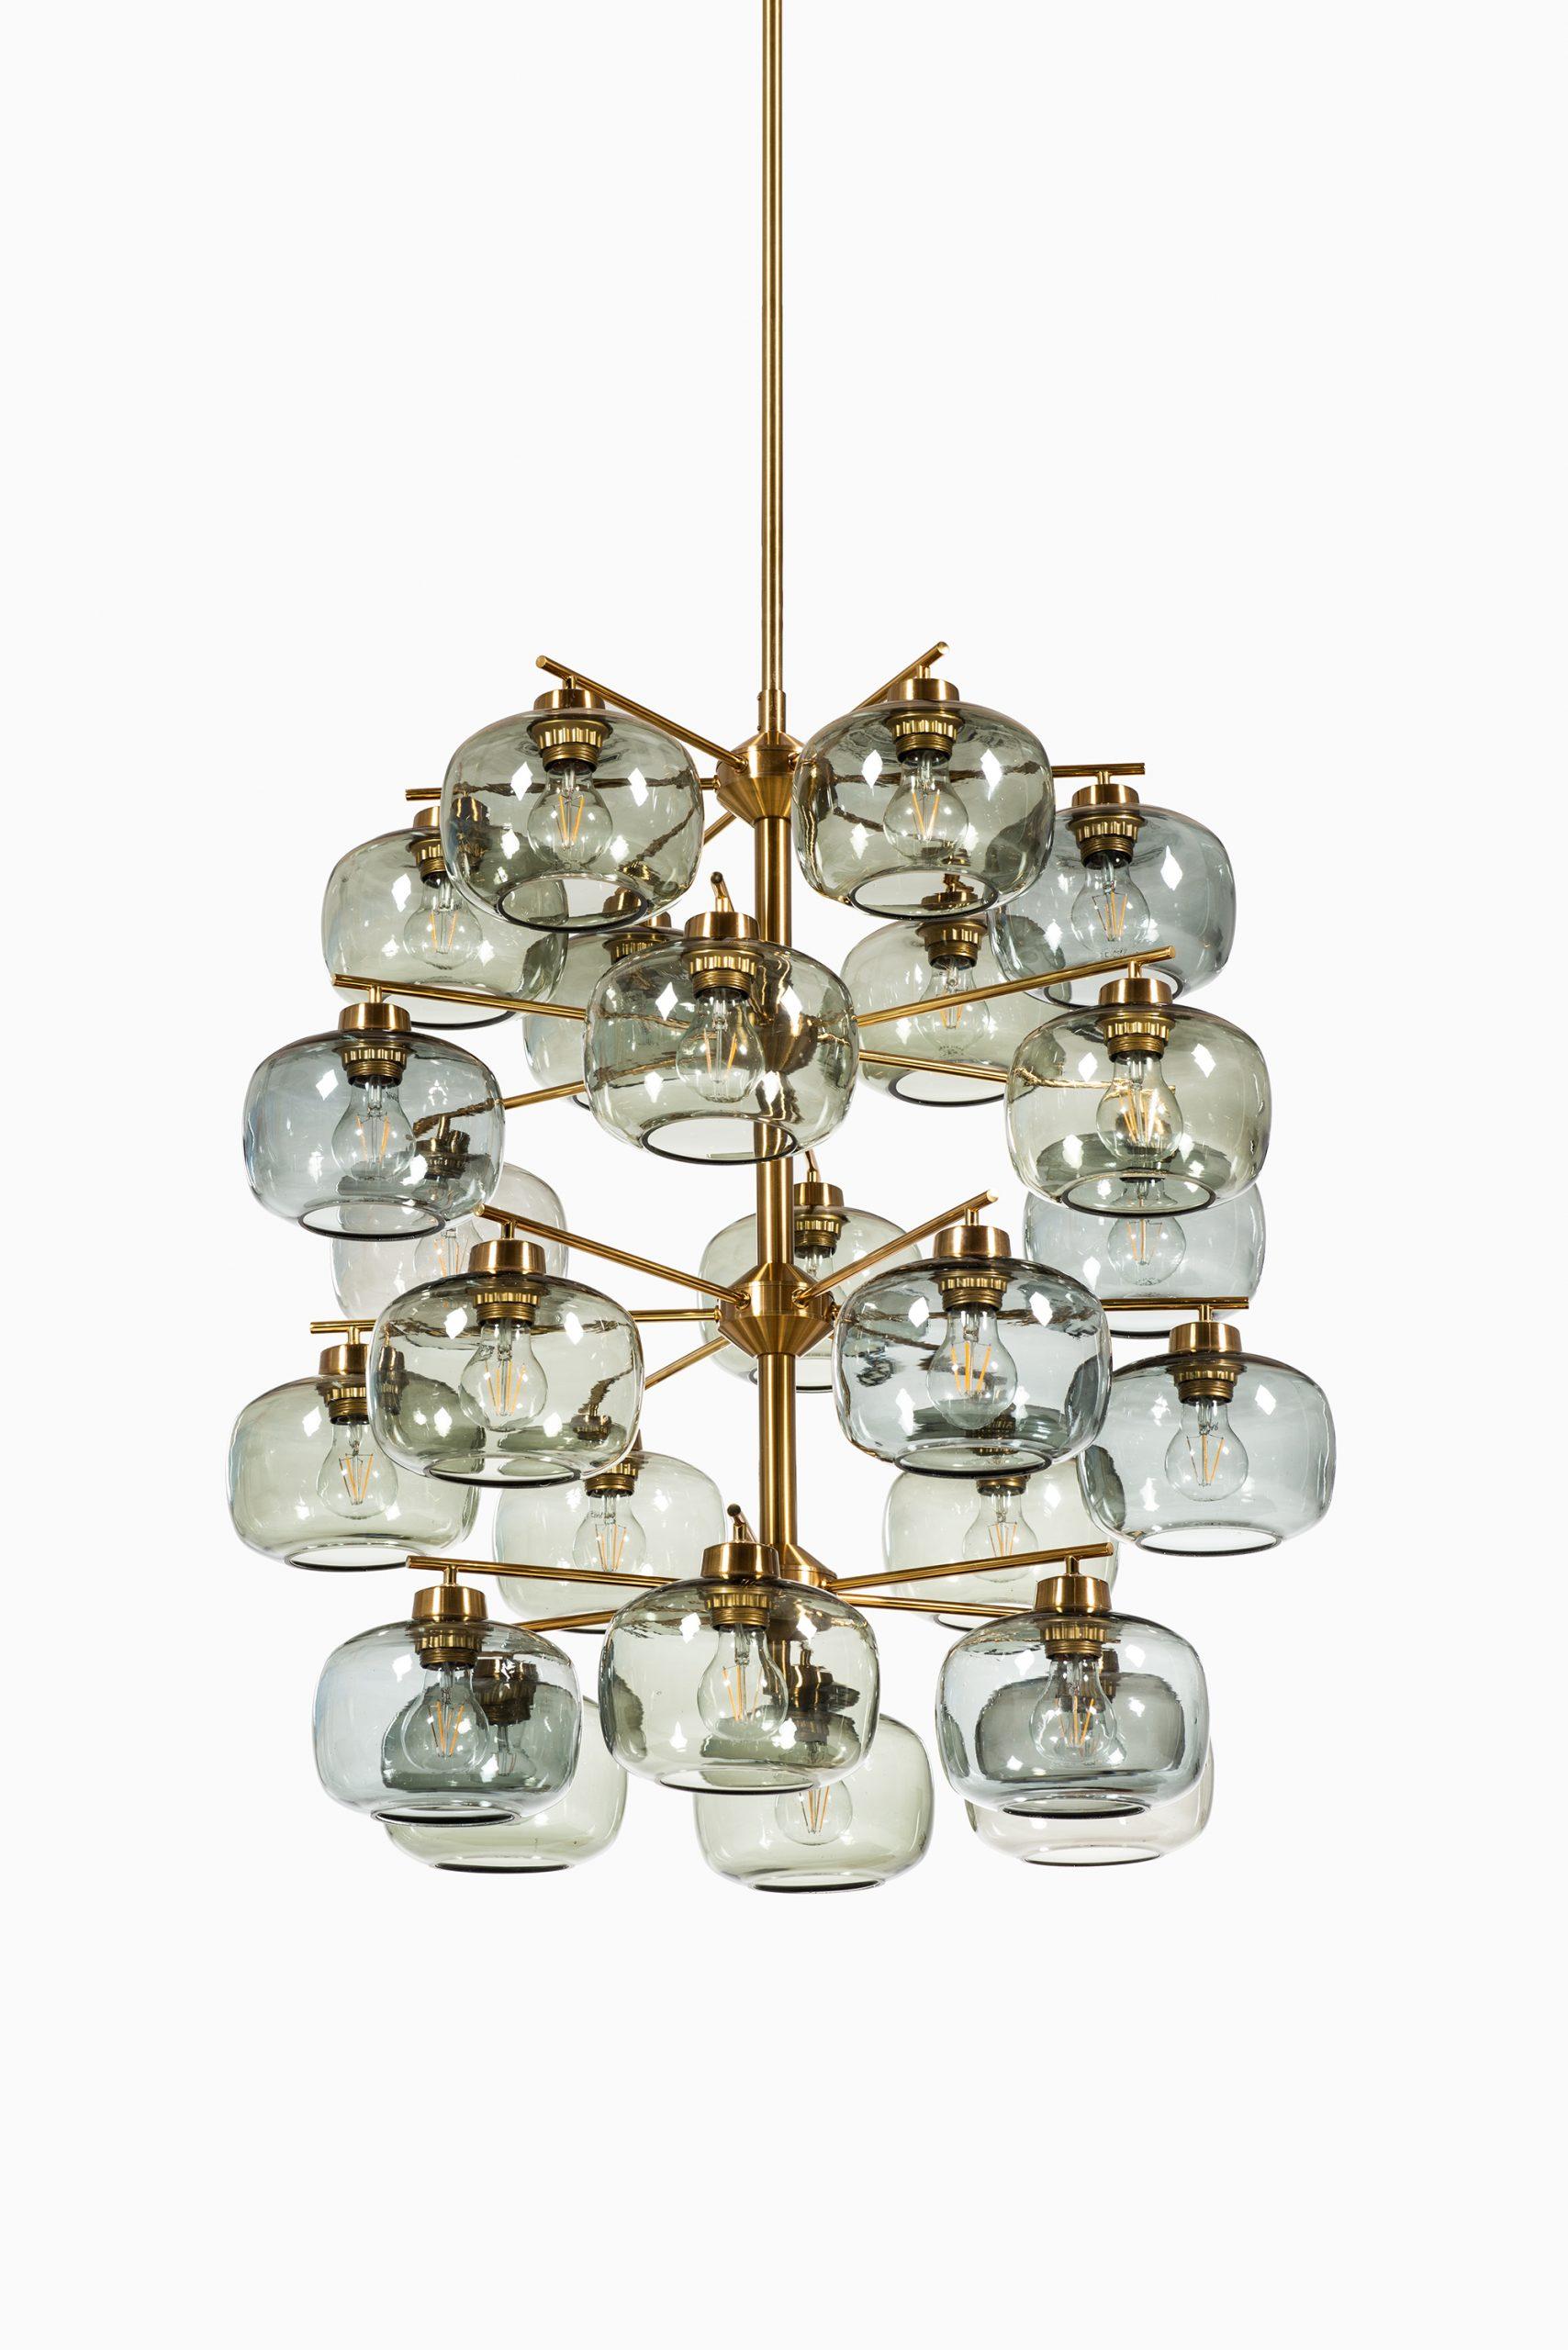 Swedish Holger Johansson Ceiling Lamp Produced by Westal in Sweden